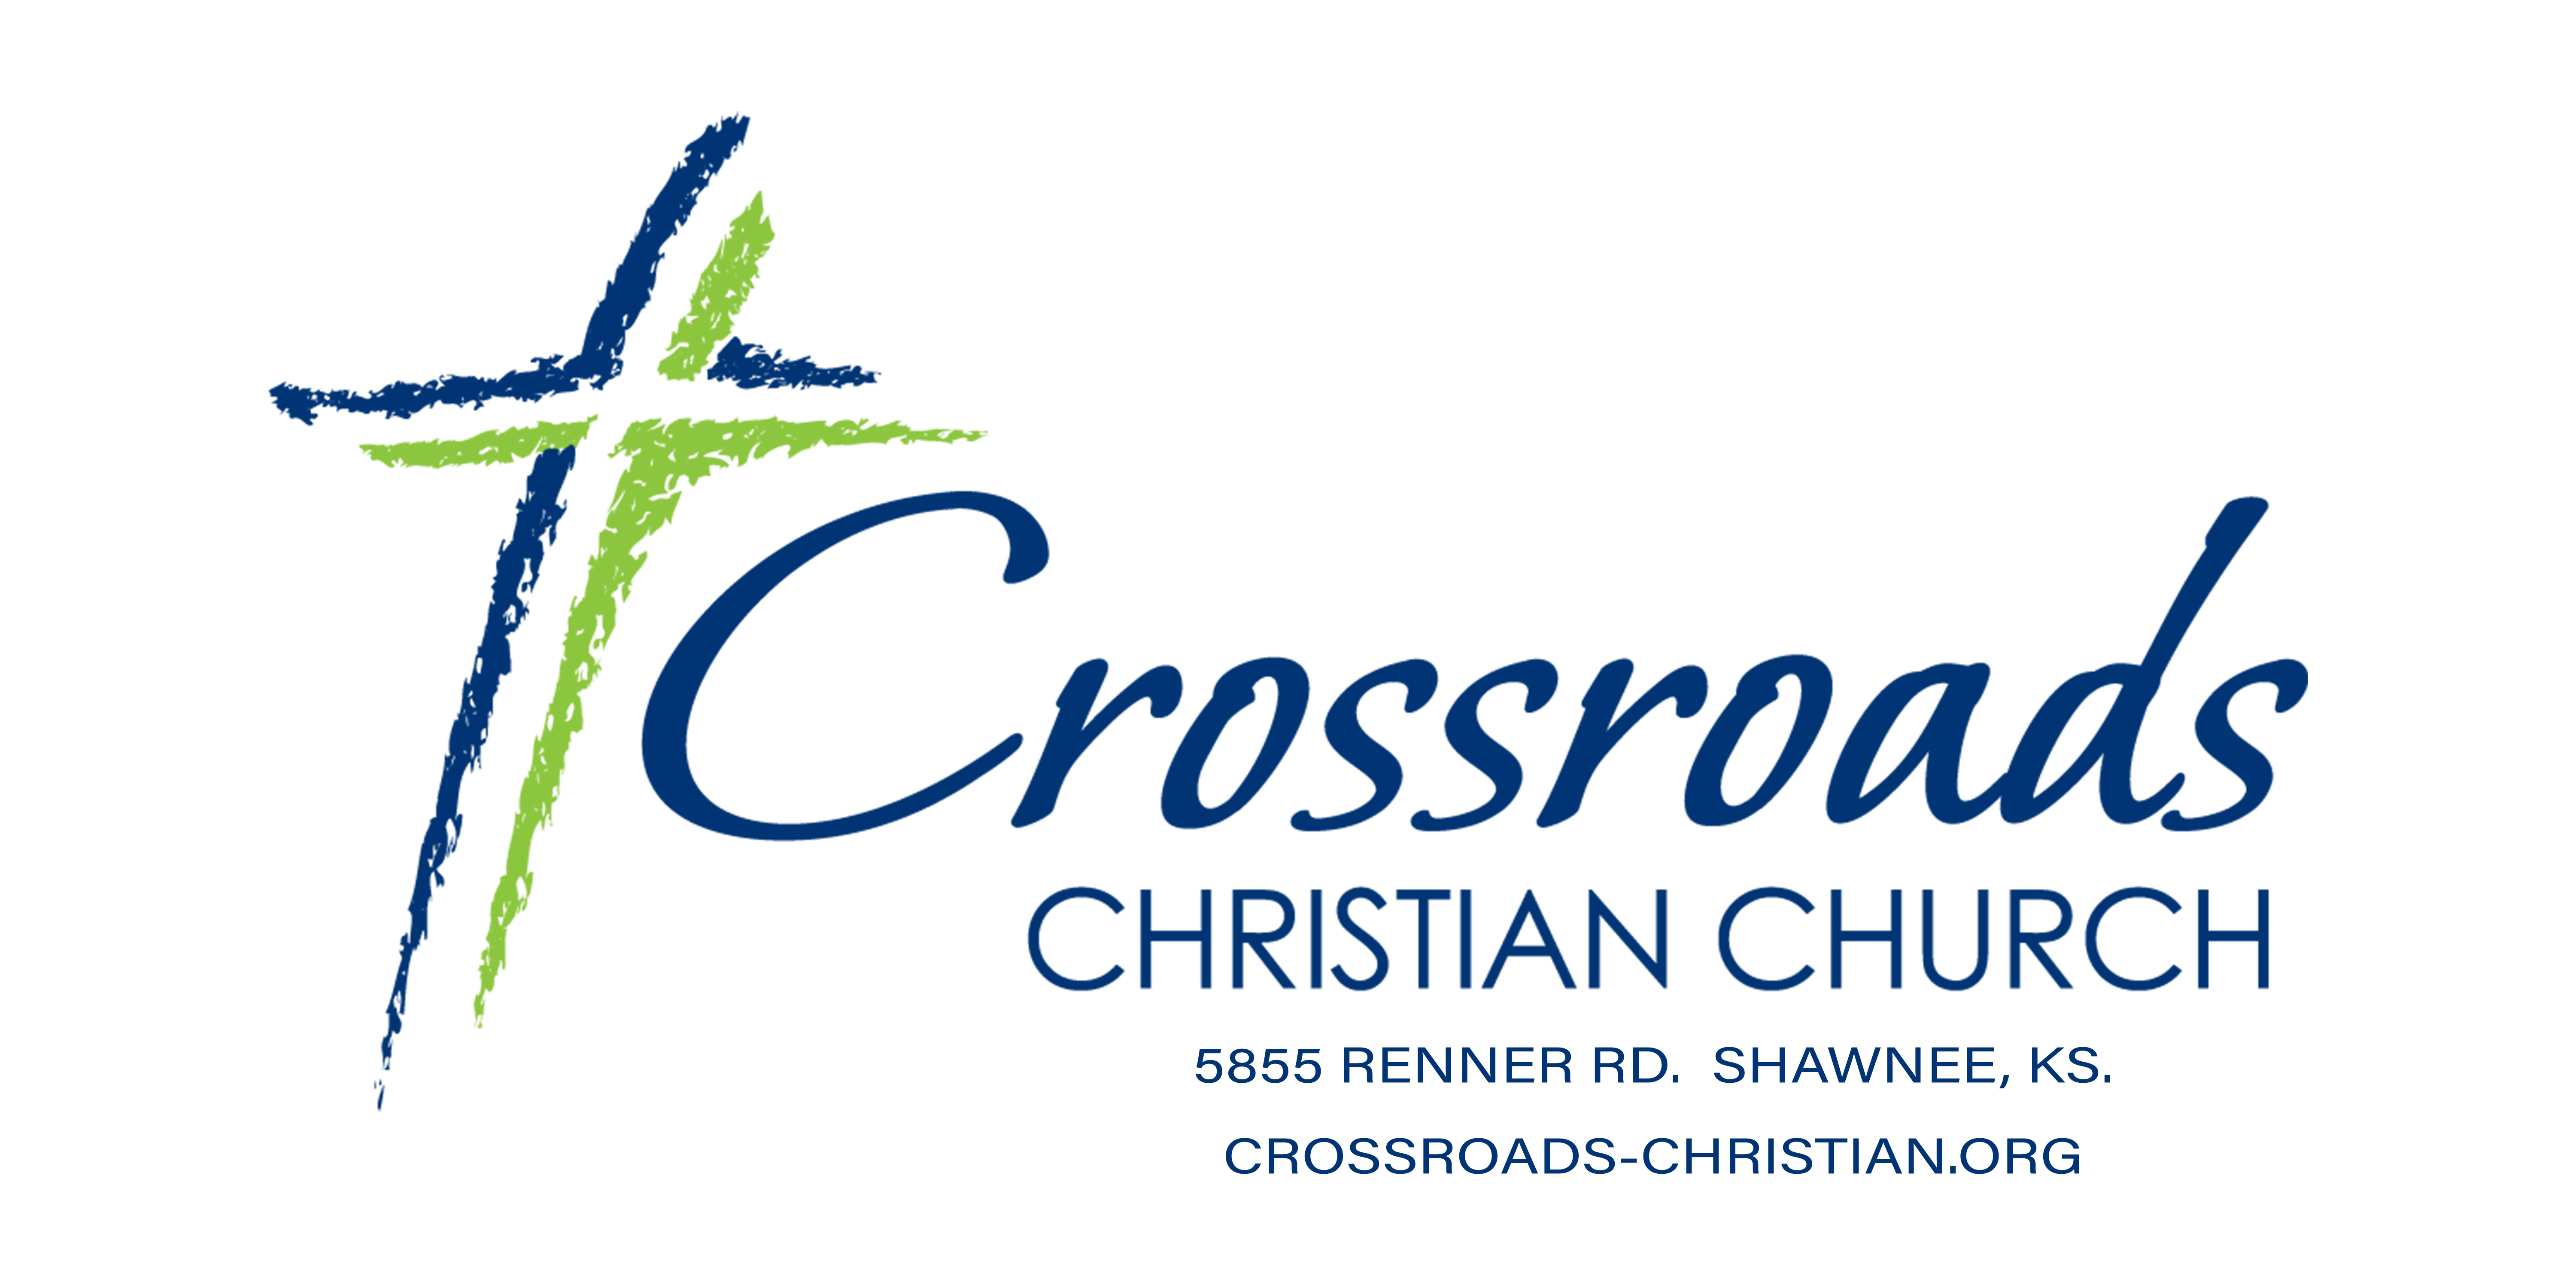 Crossroads Christian Church - Shawnee